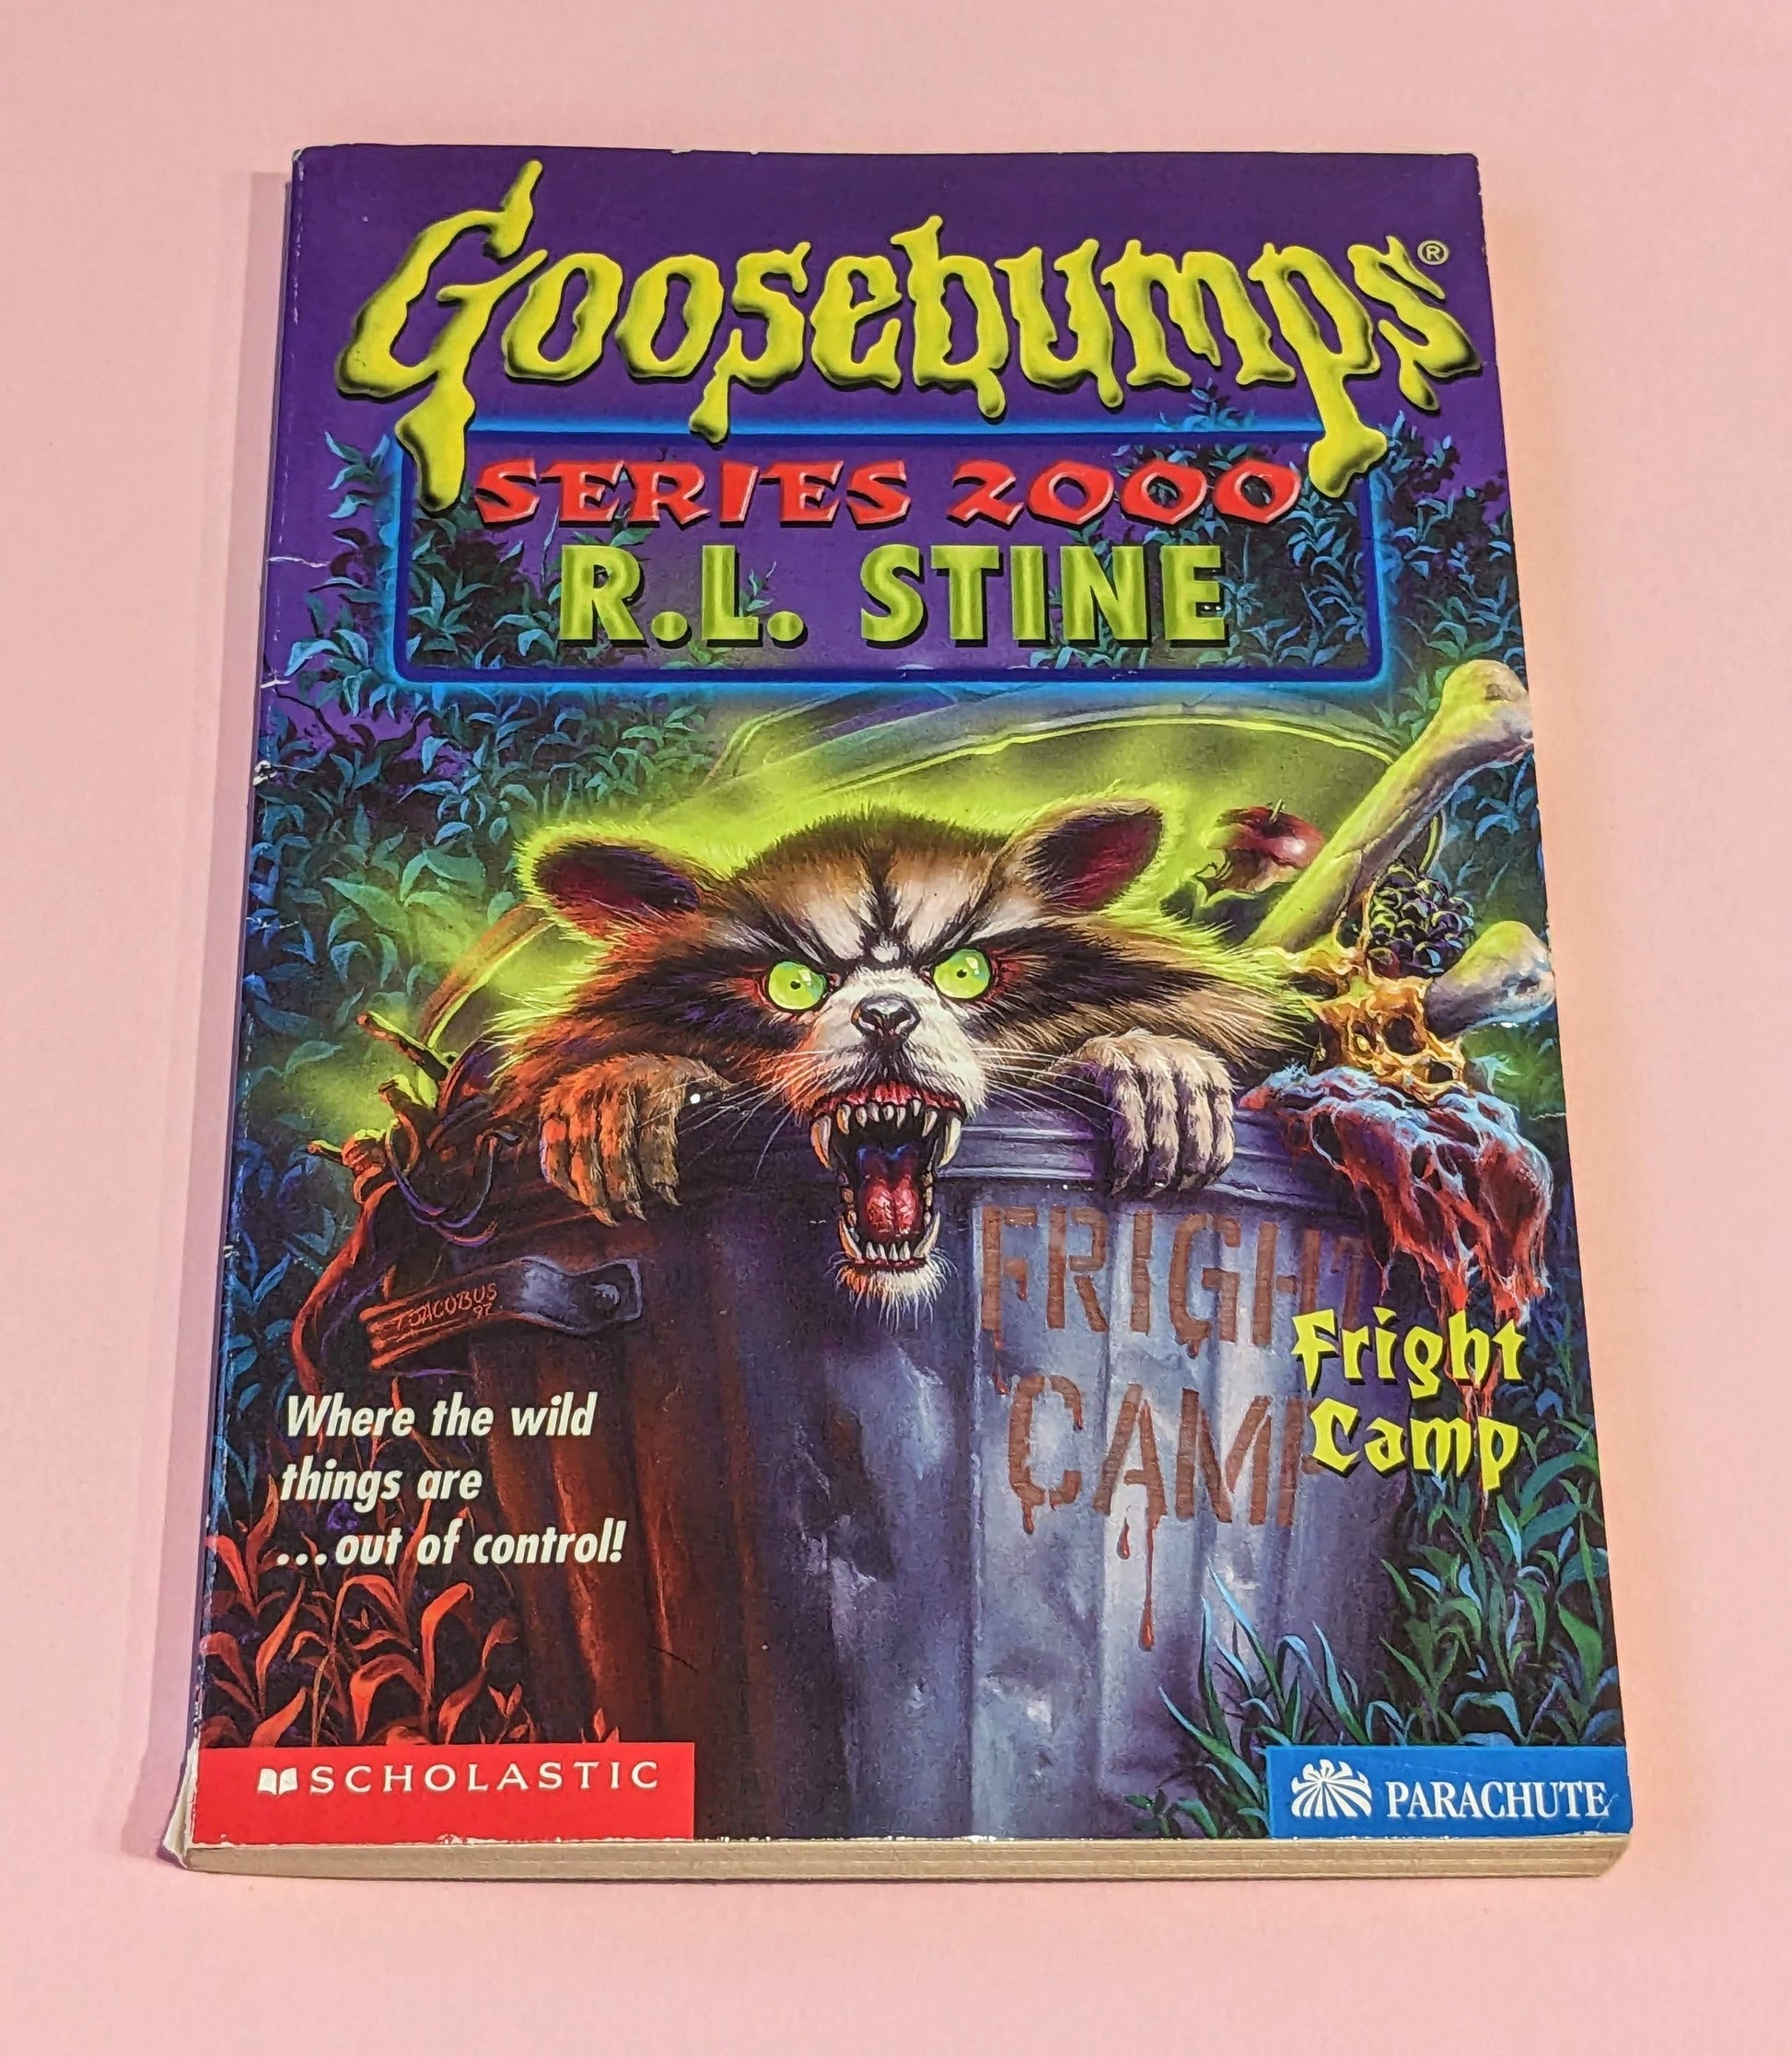 Fright Camp (Goosebumps Series 2000 #8) by R.L. Stine - Asylum Books